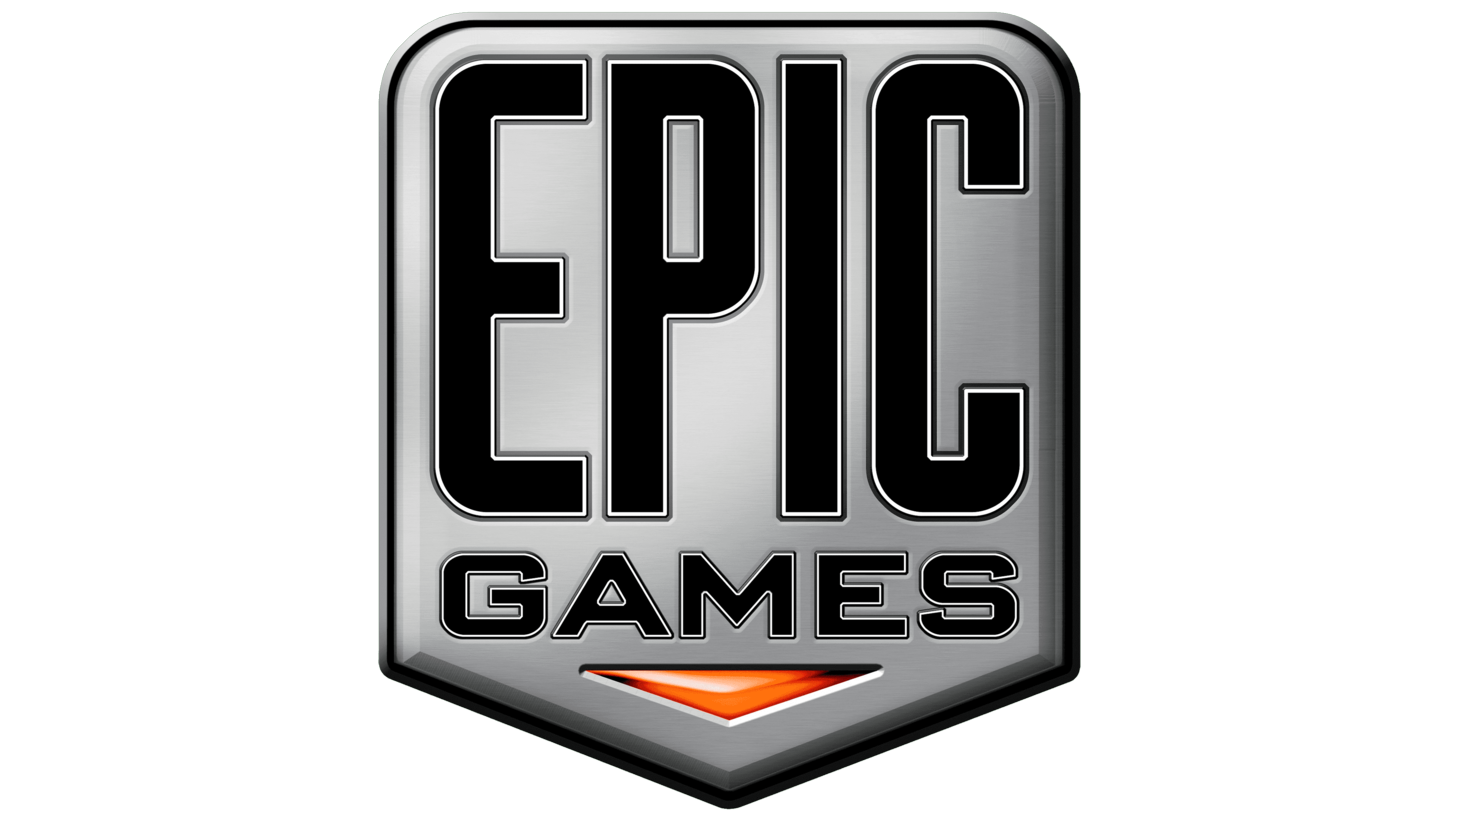 Epic games sign 2005